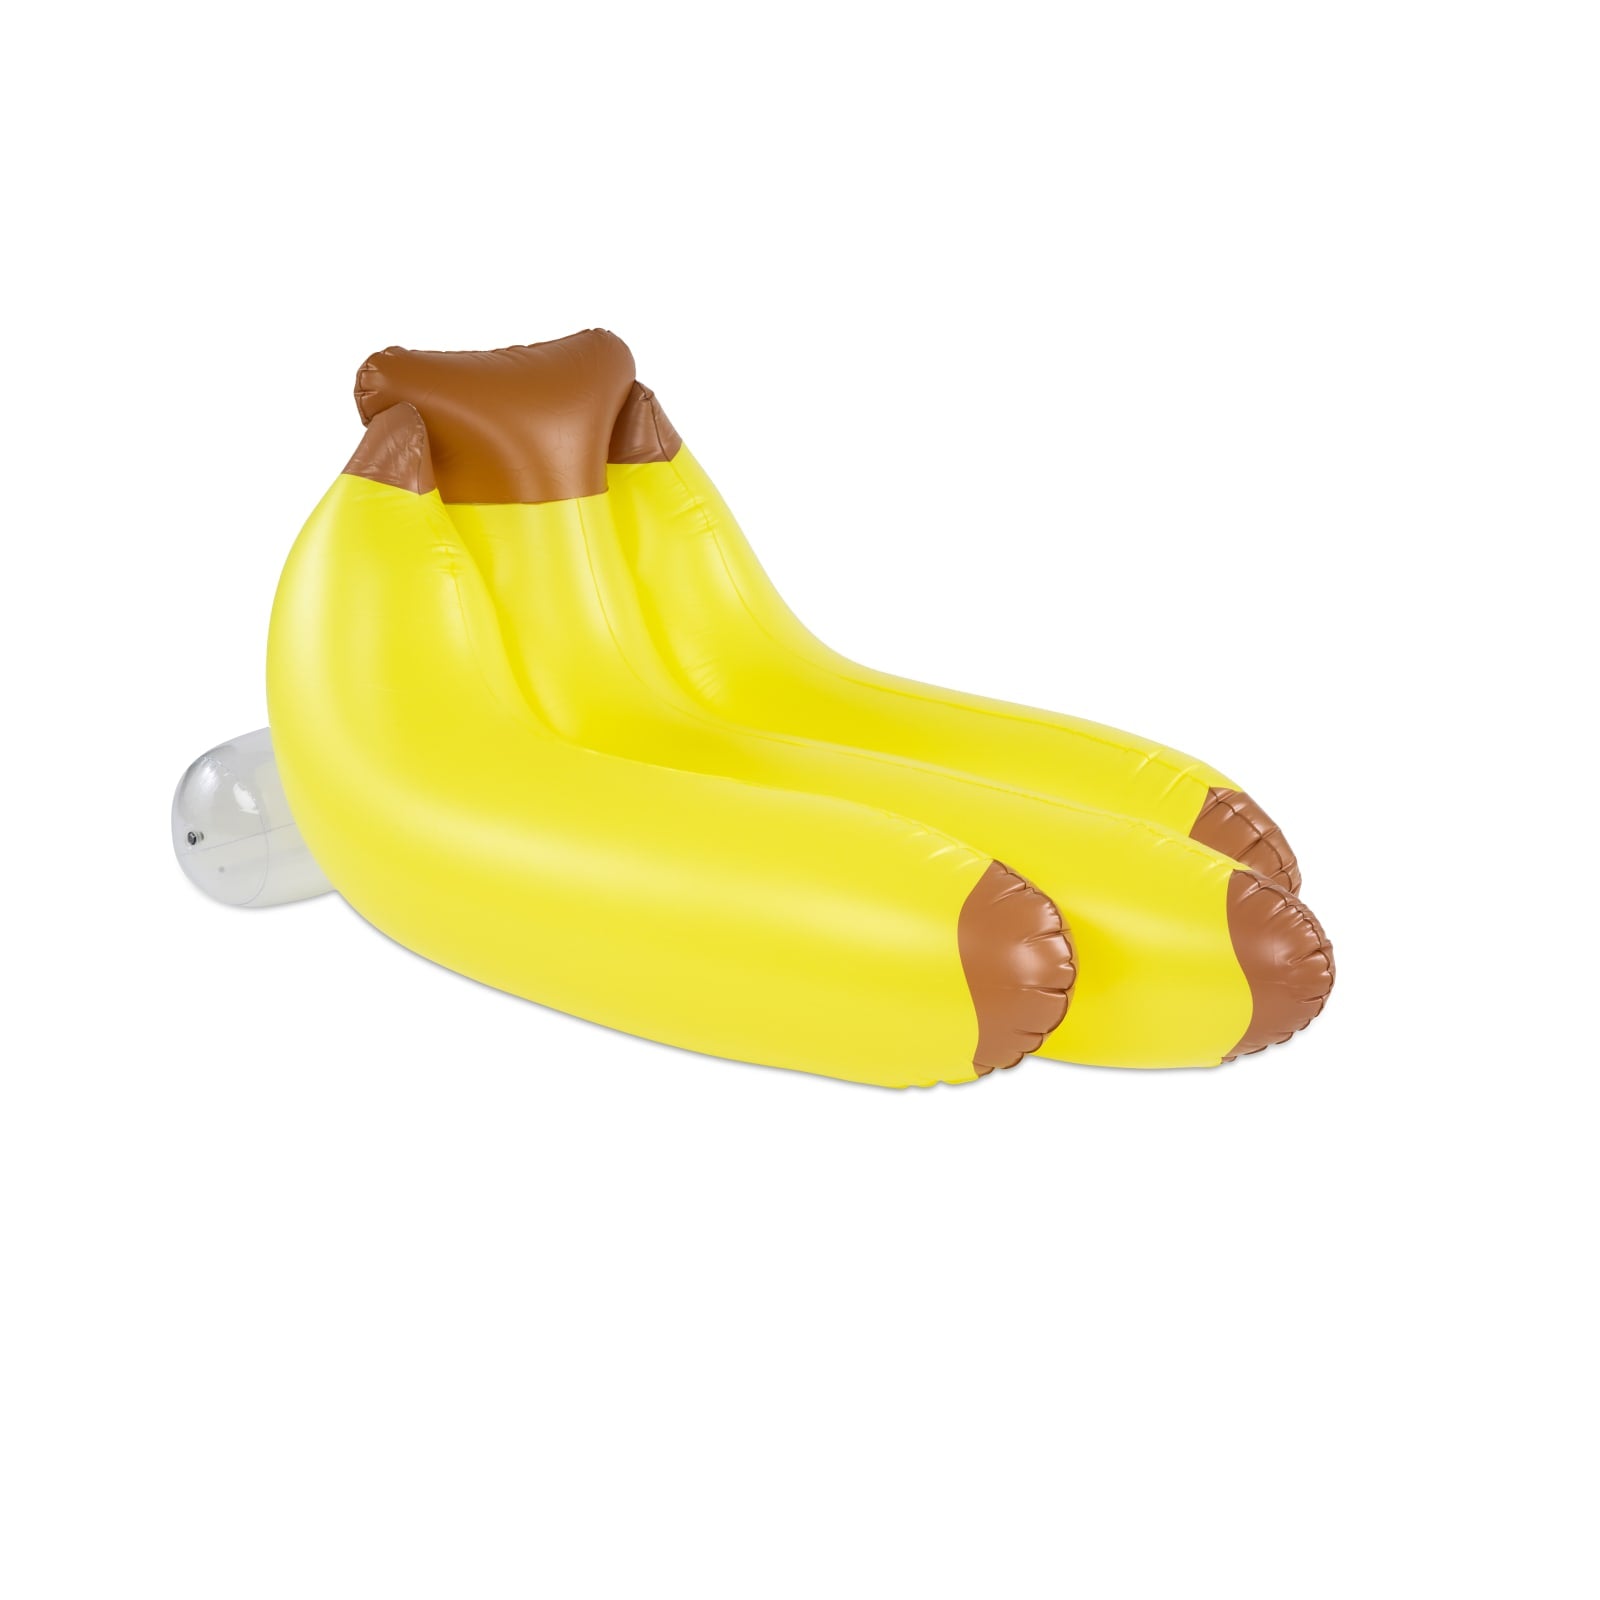 Banana Lounger (GO BANANAS LOUNGER) Pool Float